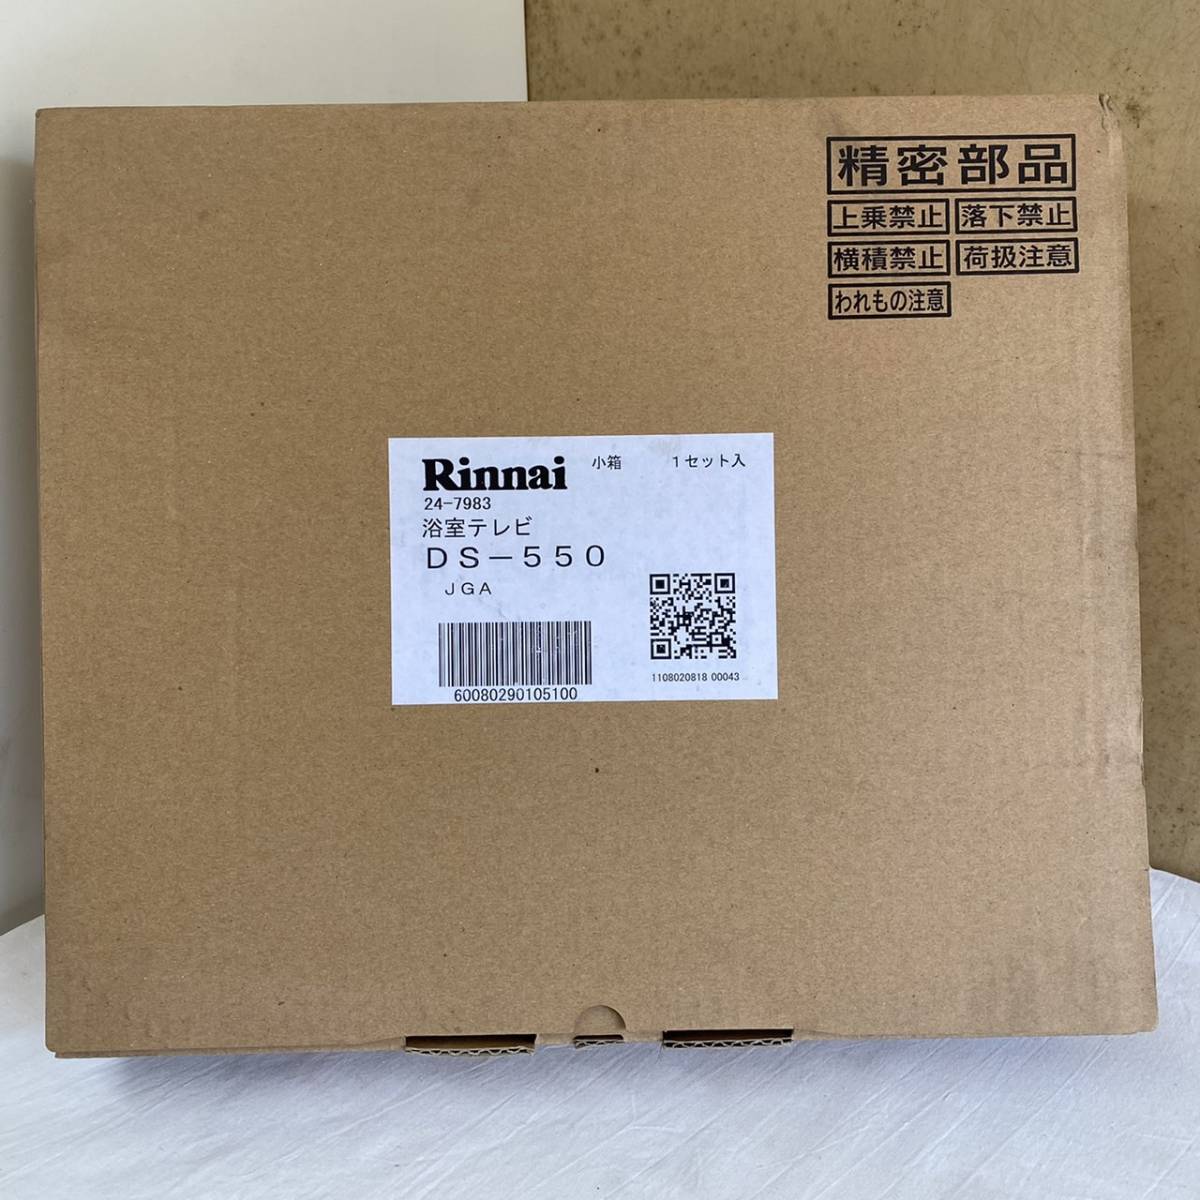 * Rinnai Rinnai liquid crystal bathroom tv ground digital 1 SEG broadcast wide 5.5 -inch DS-550 unused goods present condition delivery ①[ secondhand goods ]*